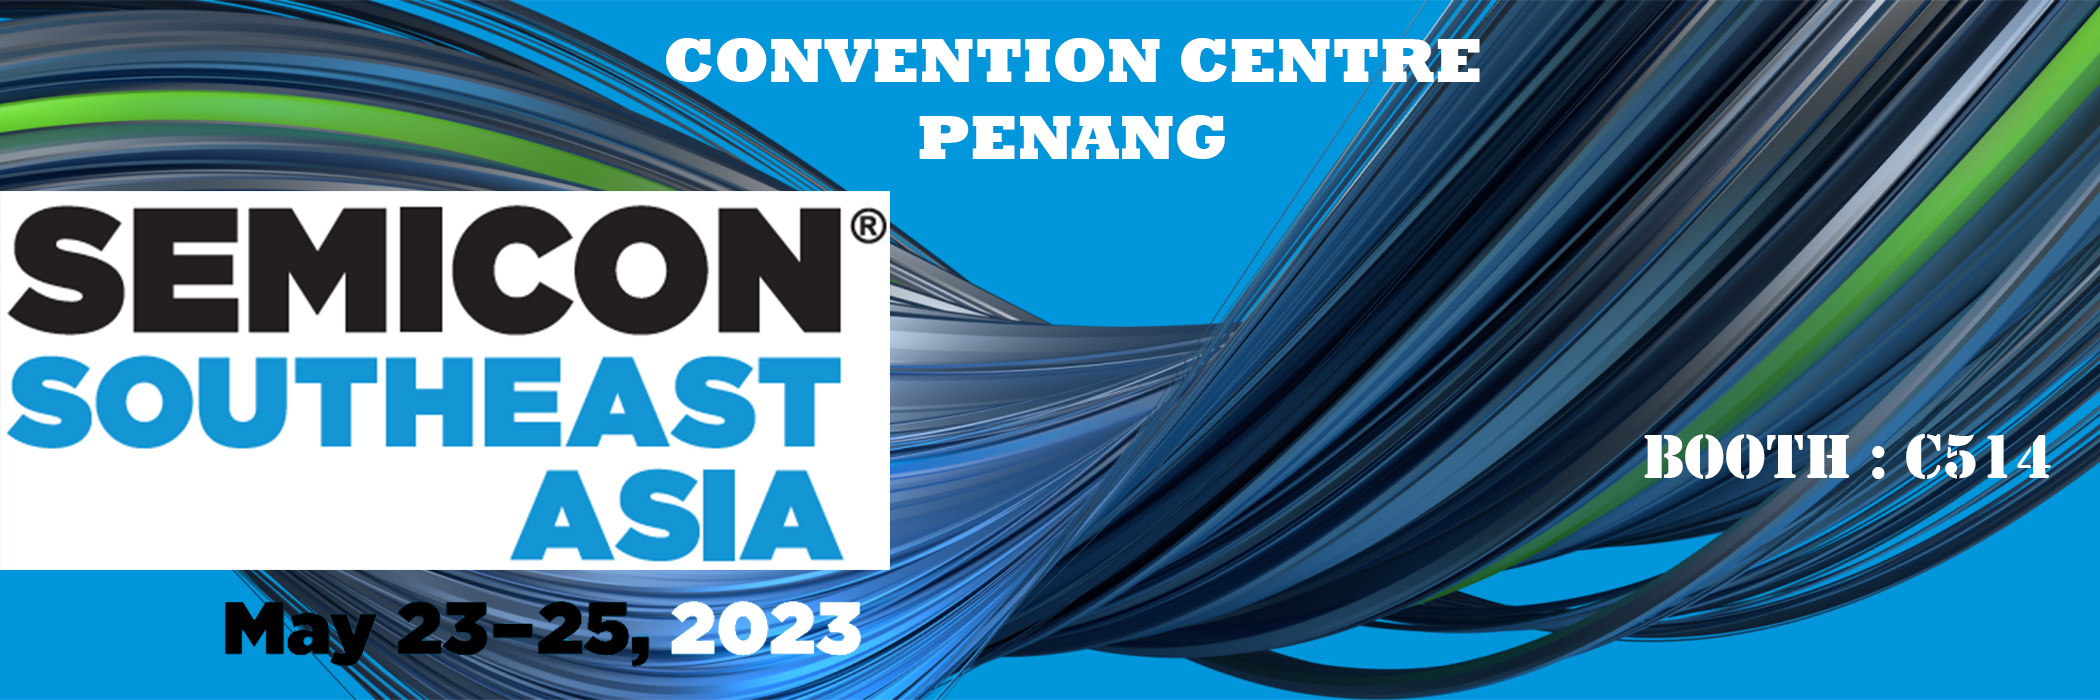 Semiconsea 2023 at Penang Convention Centre